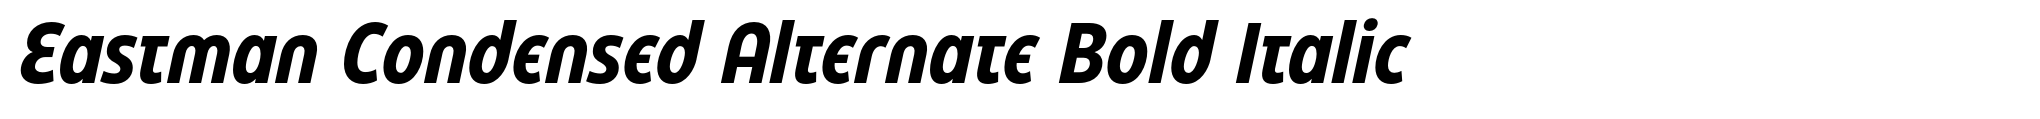 Eastman Condensed Alternate Bold Italic image